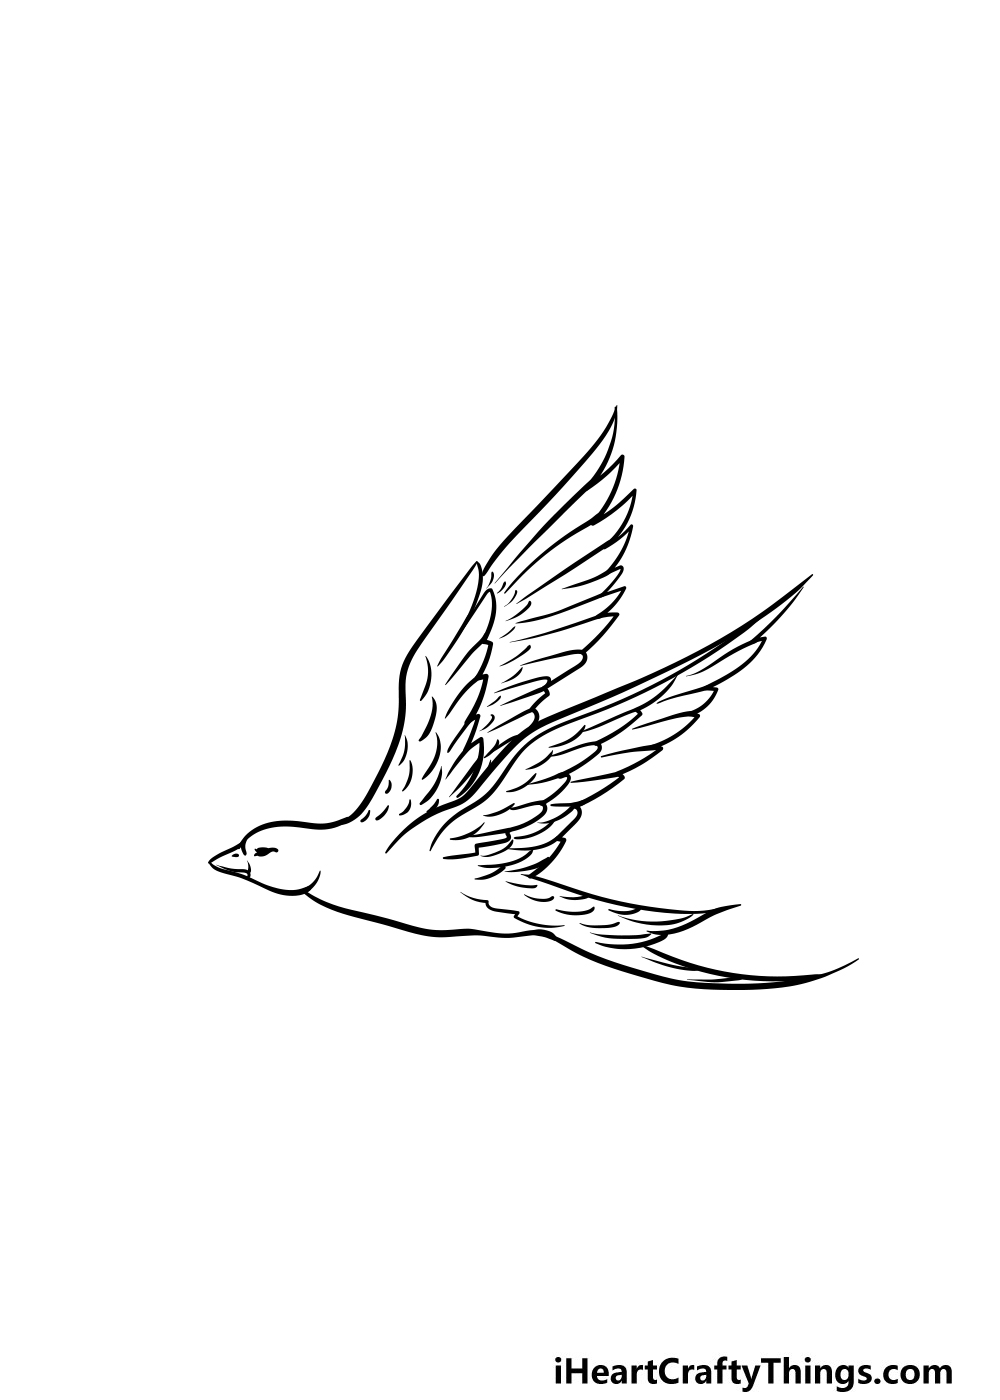 Bird Flying Drawing Stunning Sketch